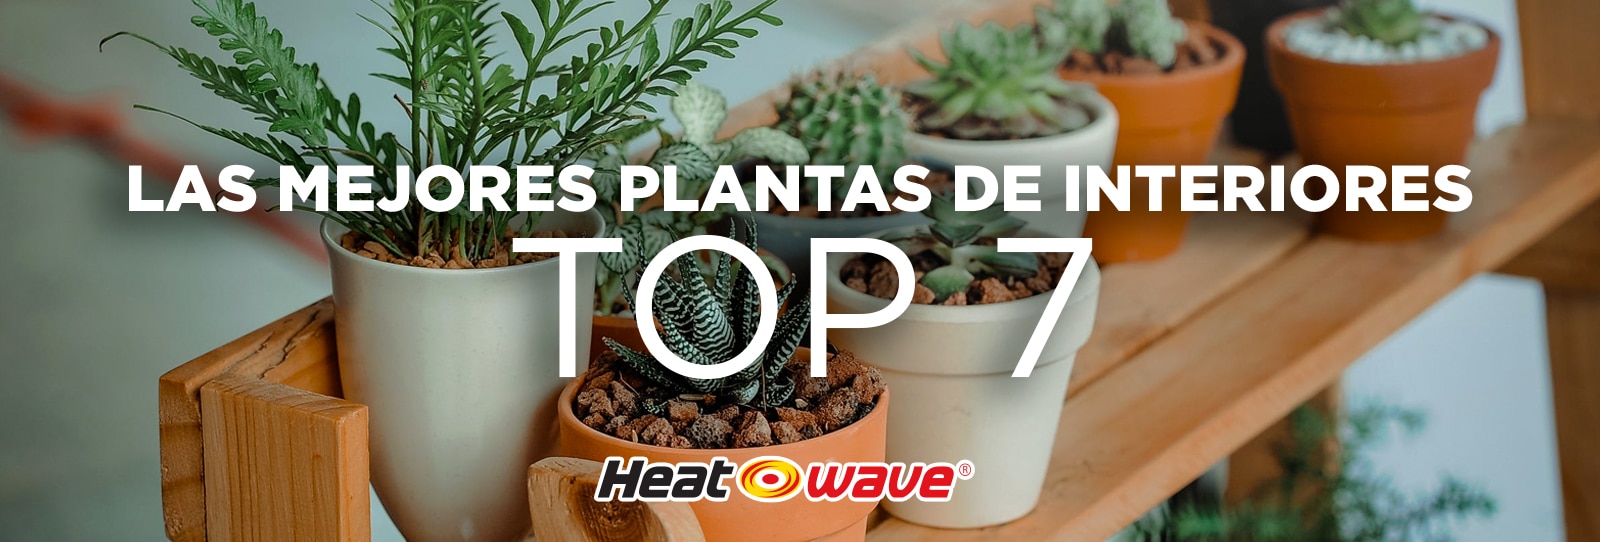 Heatwave-Blog-Plantas-01